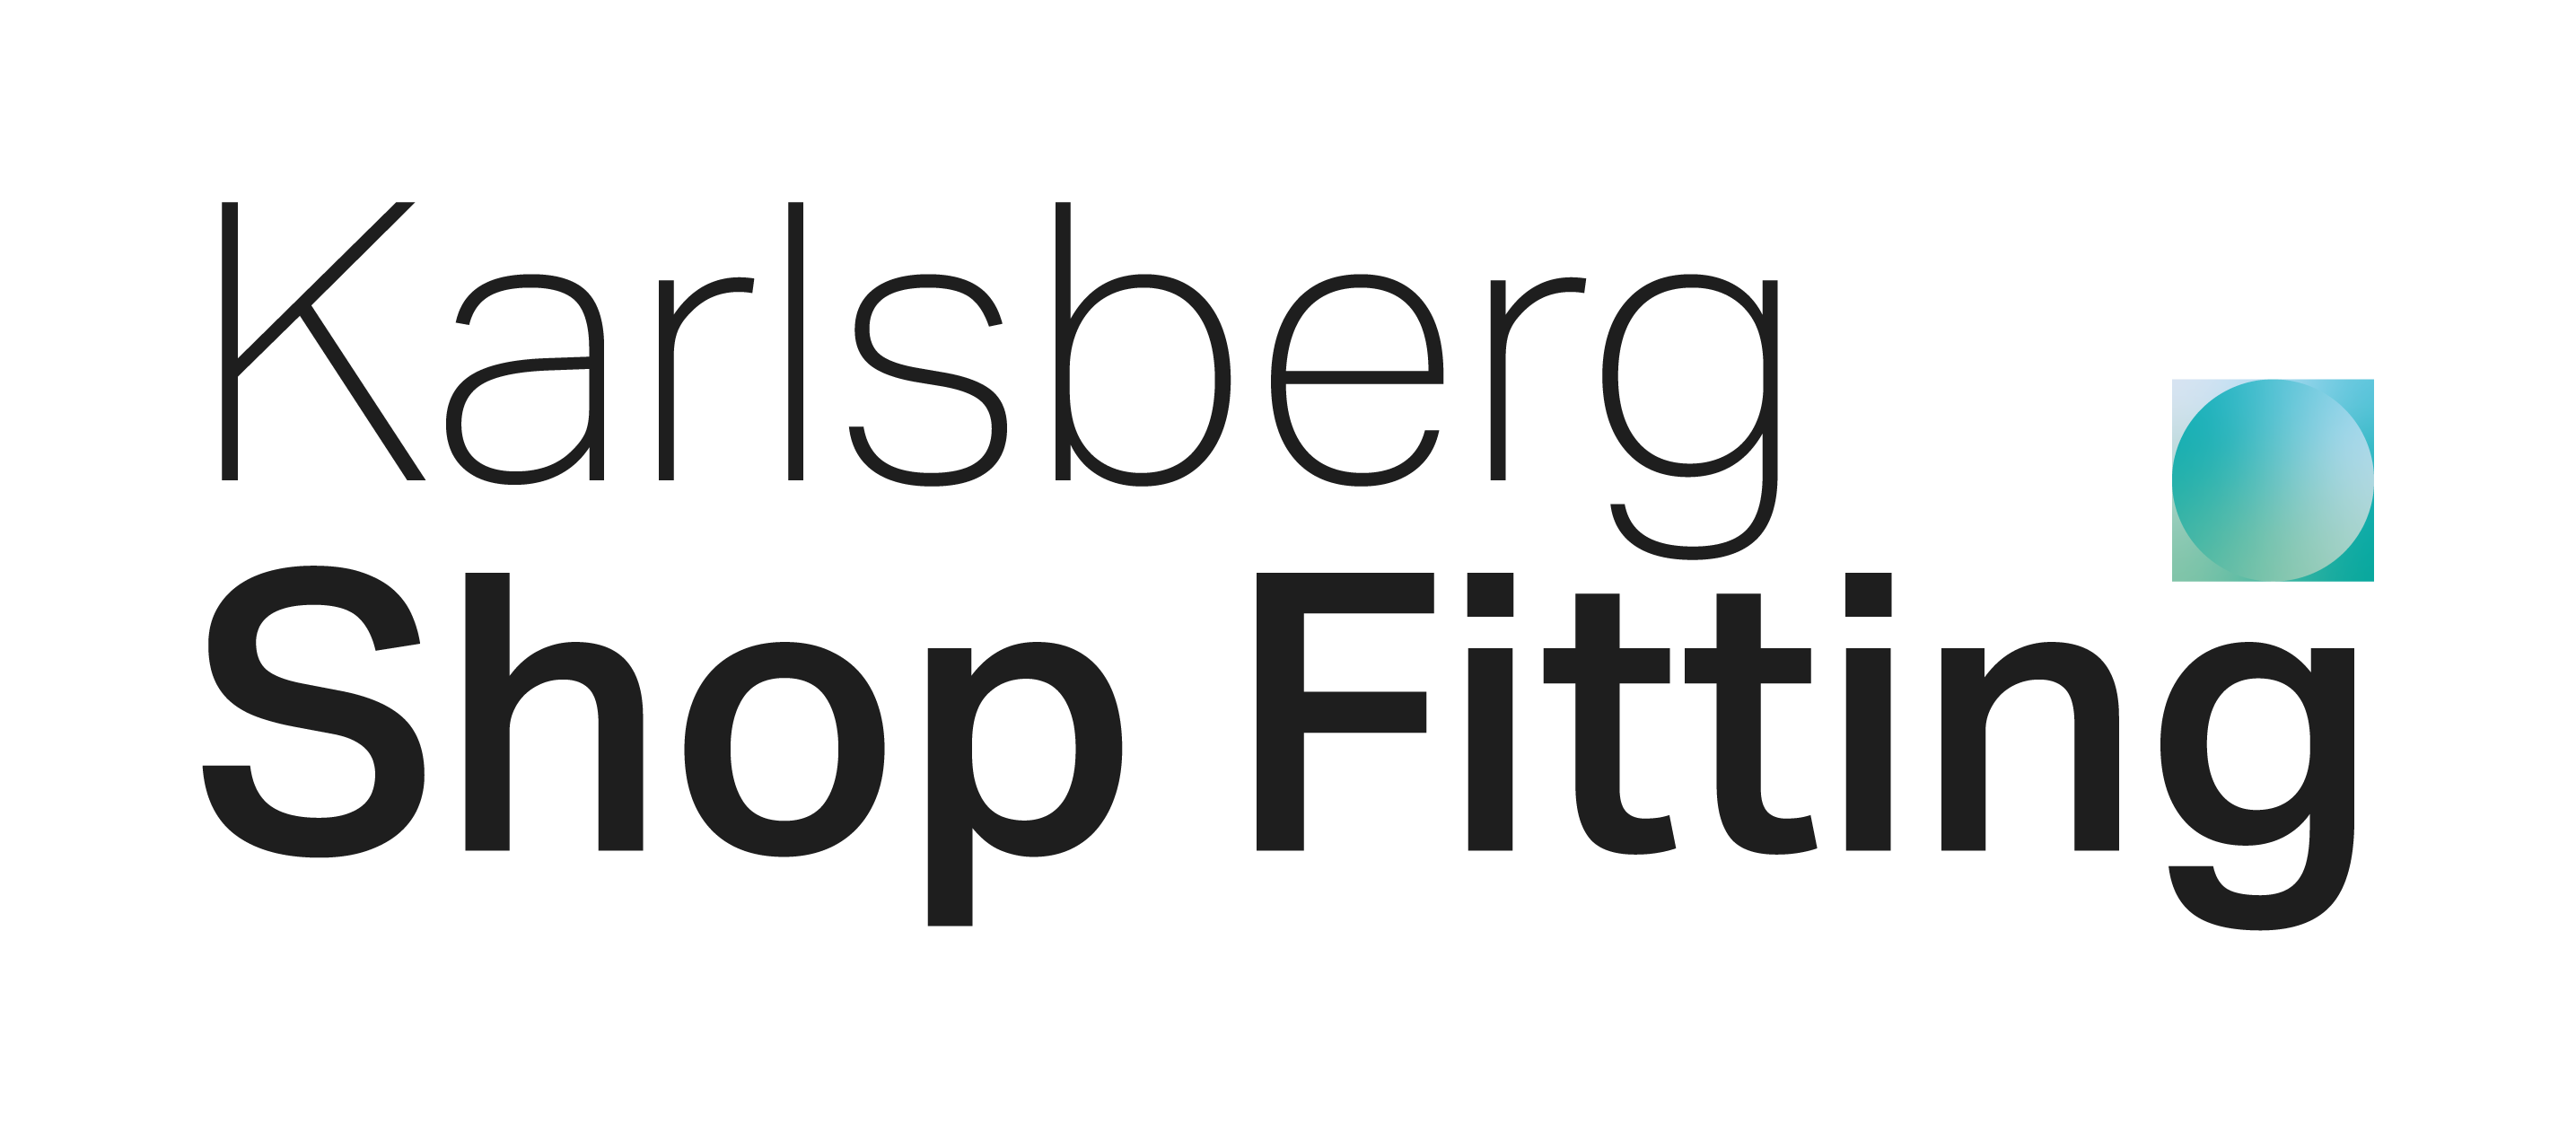 Karlsberg Shop Fitting logo